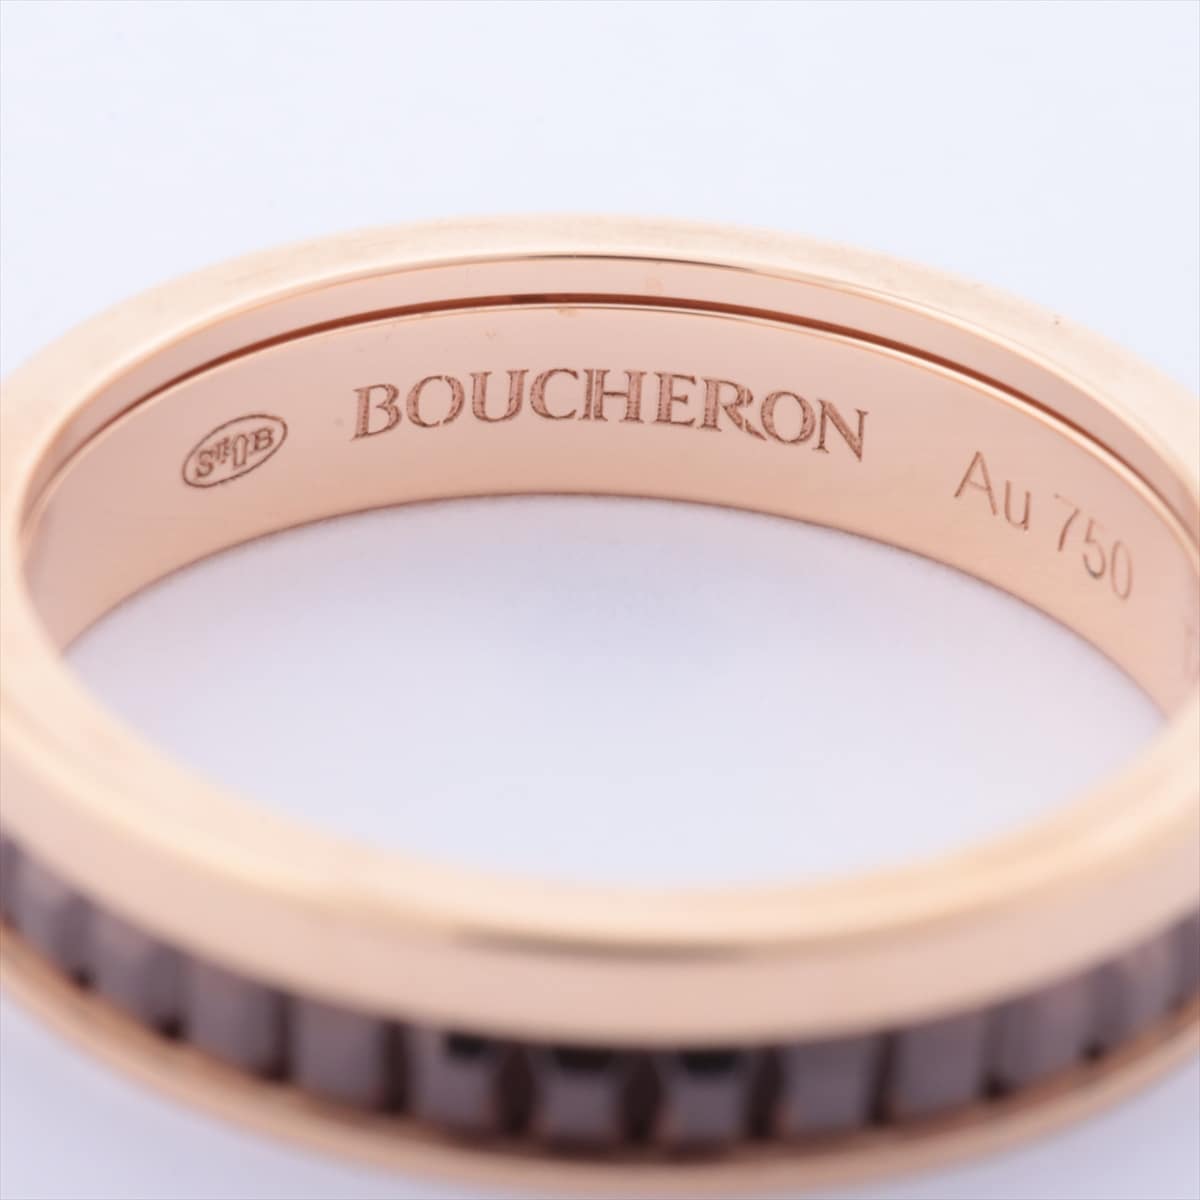 Boucheron Quatre Classic rings 750PG 3.8g 48